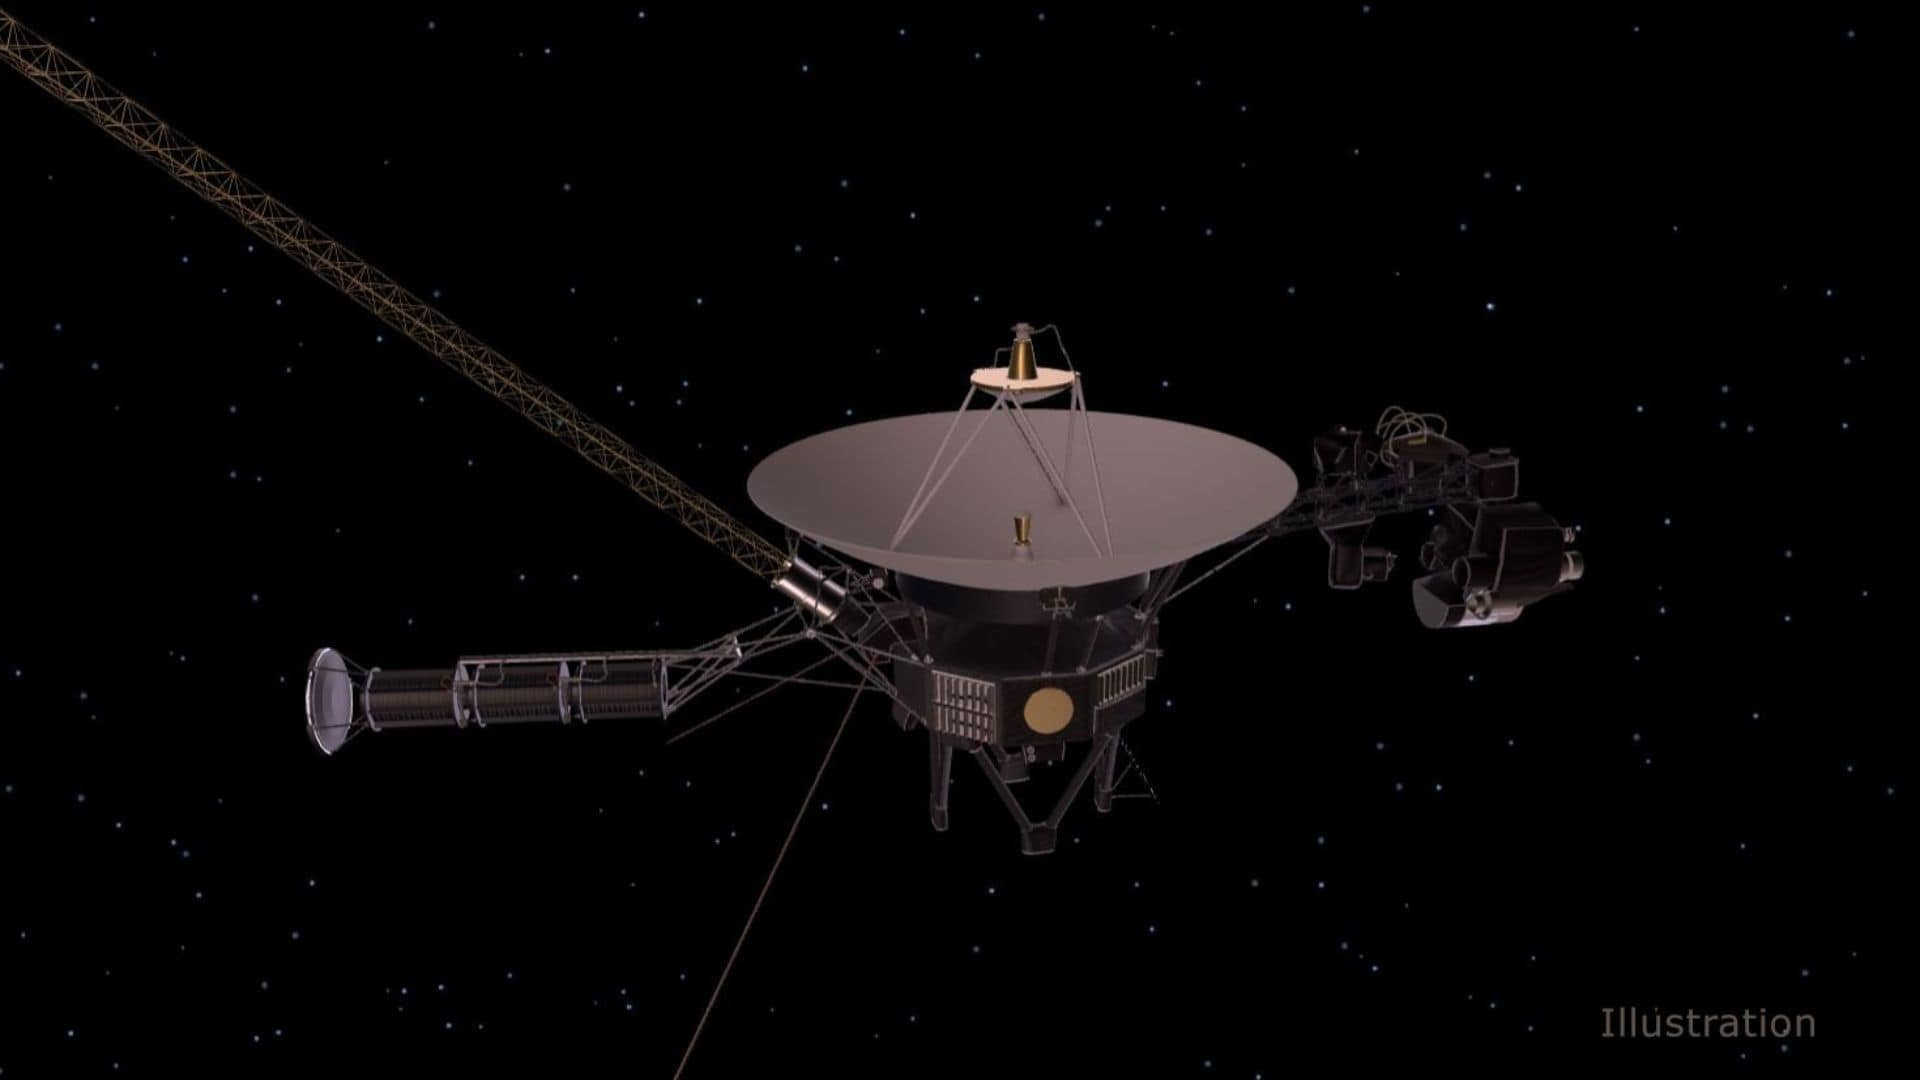 An artist's illustration of NASA's Voyager 1 spacecraft